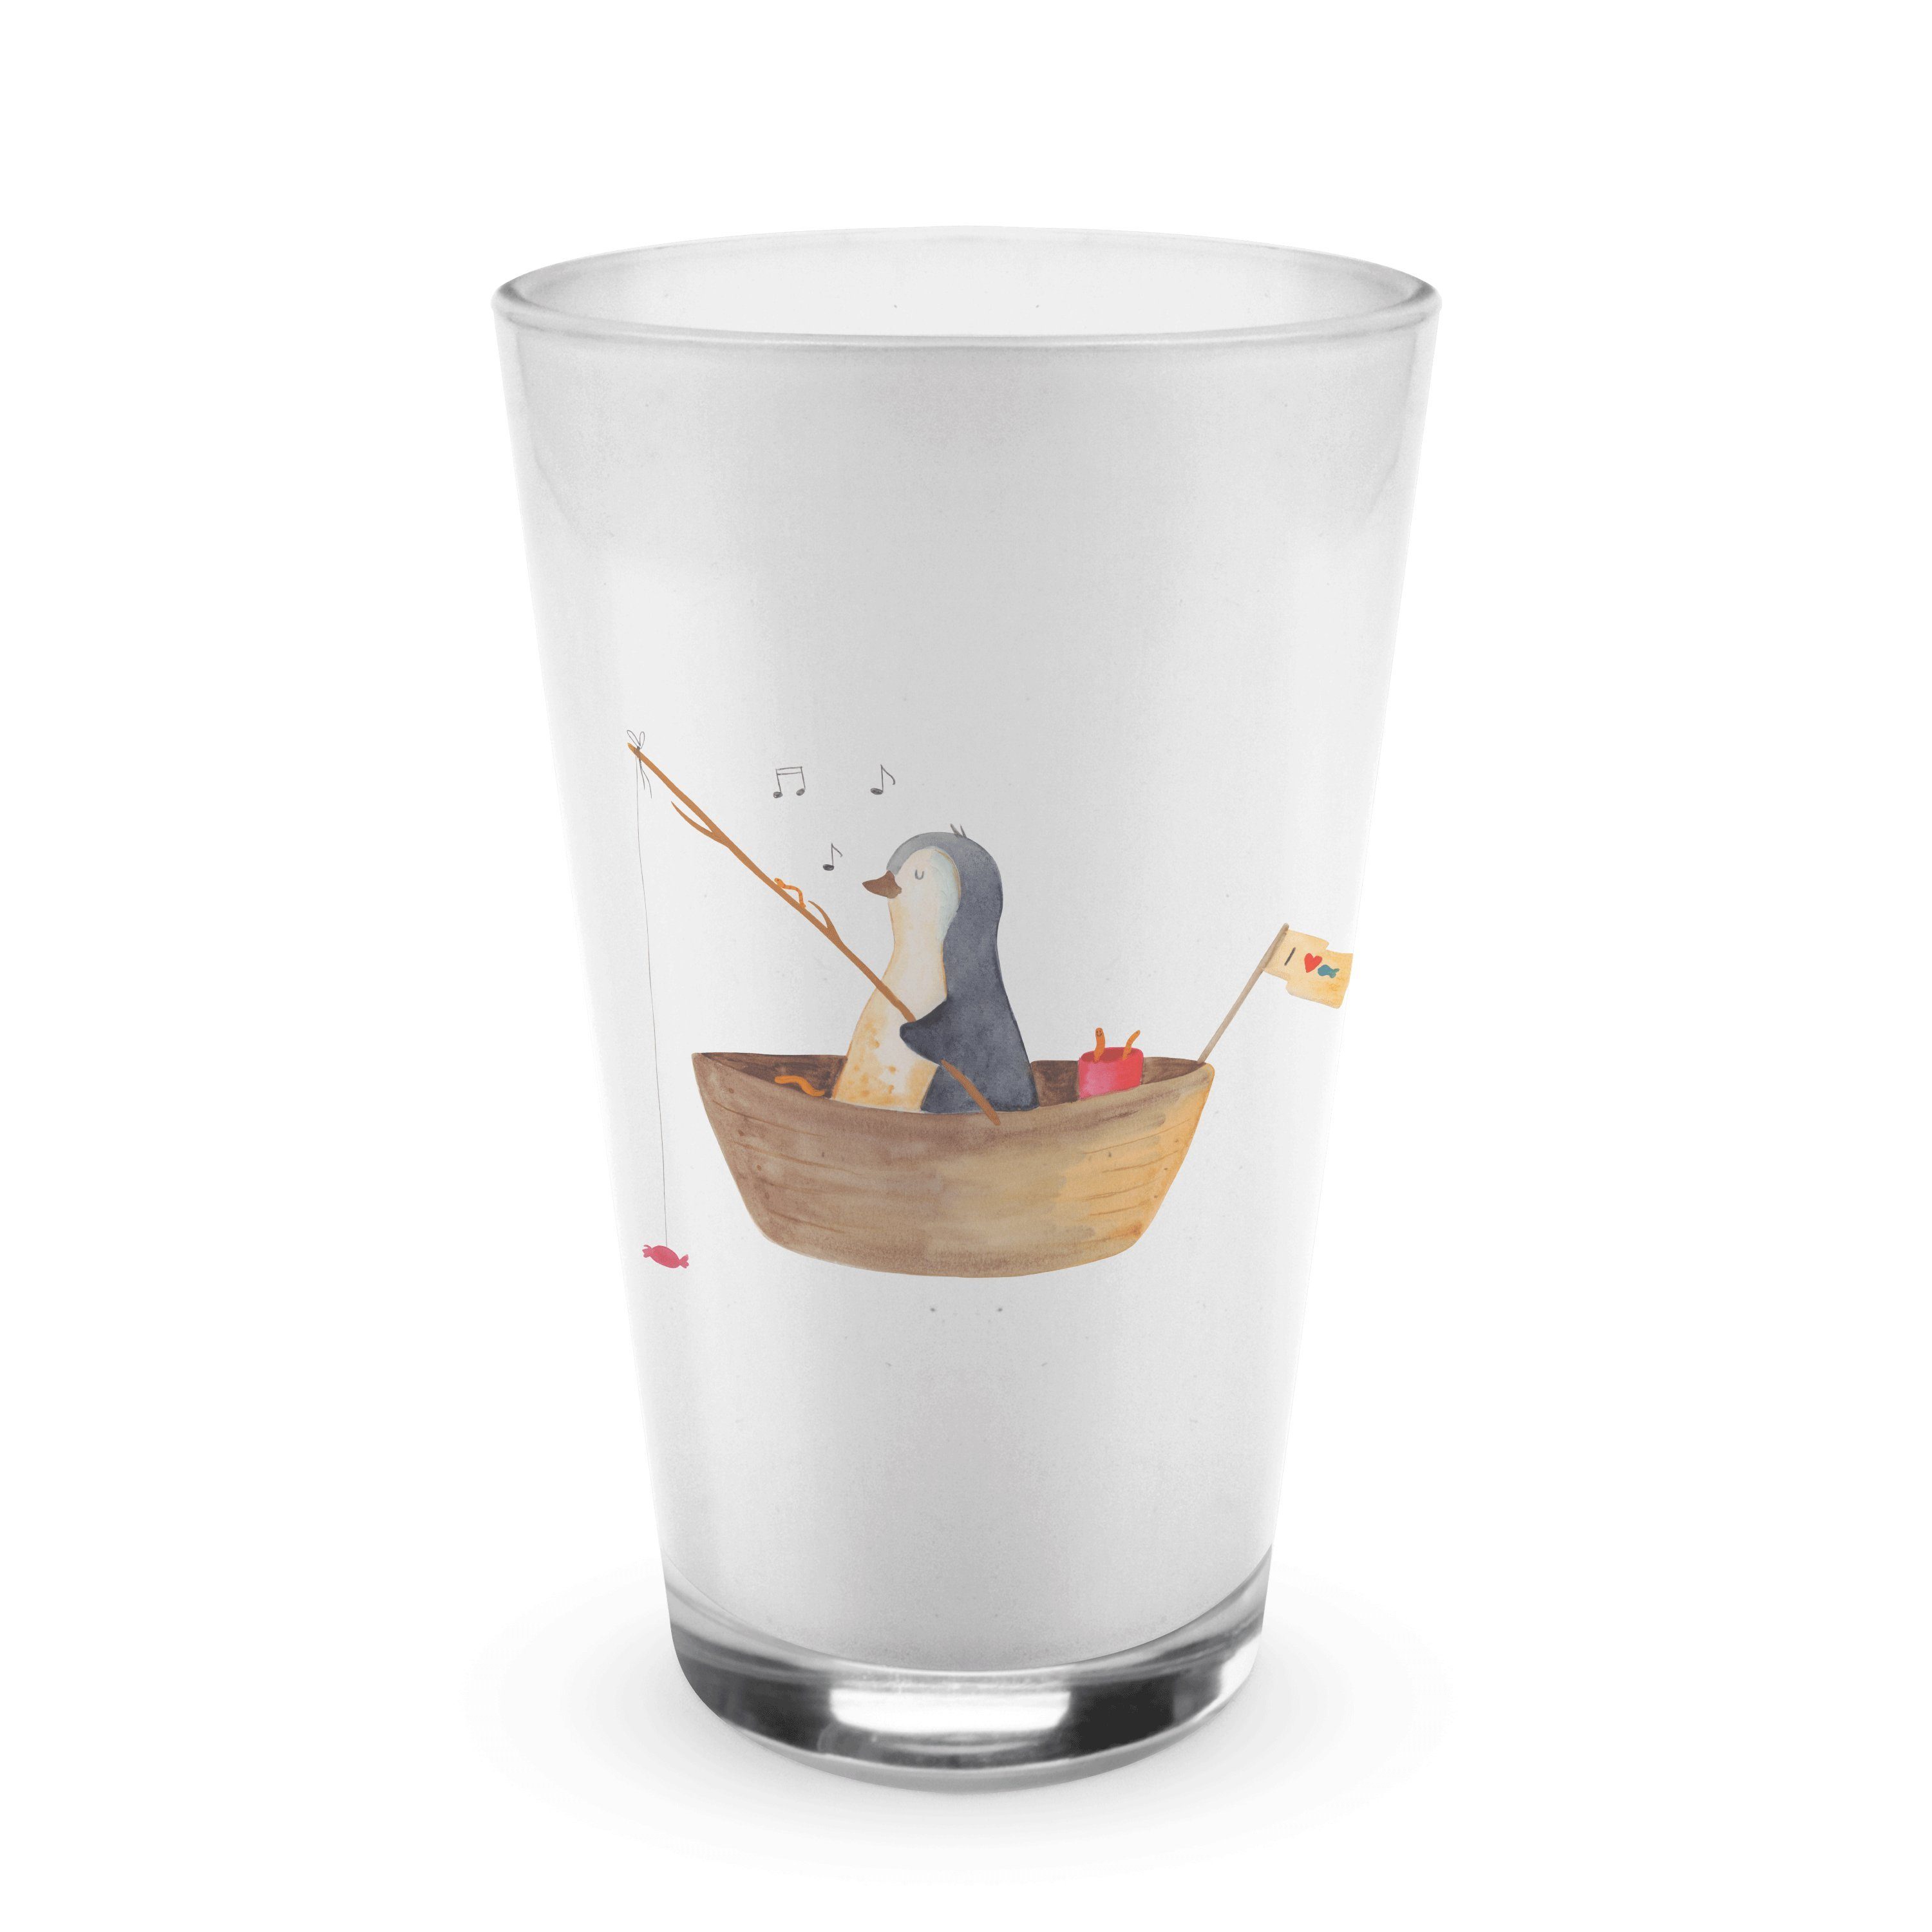 Mr. & Mrs. Panda Glas Geschenk, - Transparent Glas, Cappuccino Glas Premium Angeln, - Angelboot Pinguin